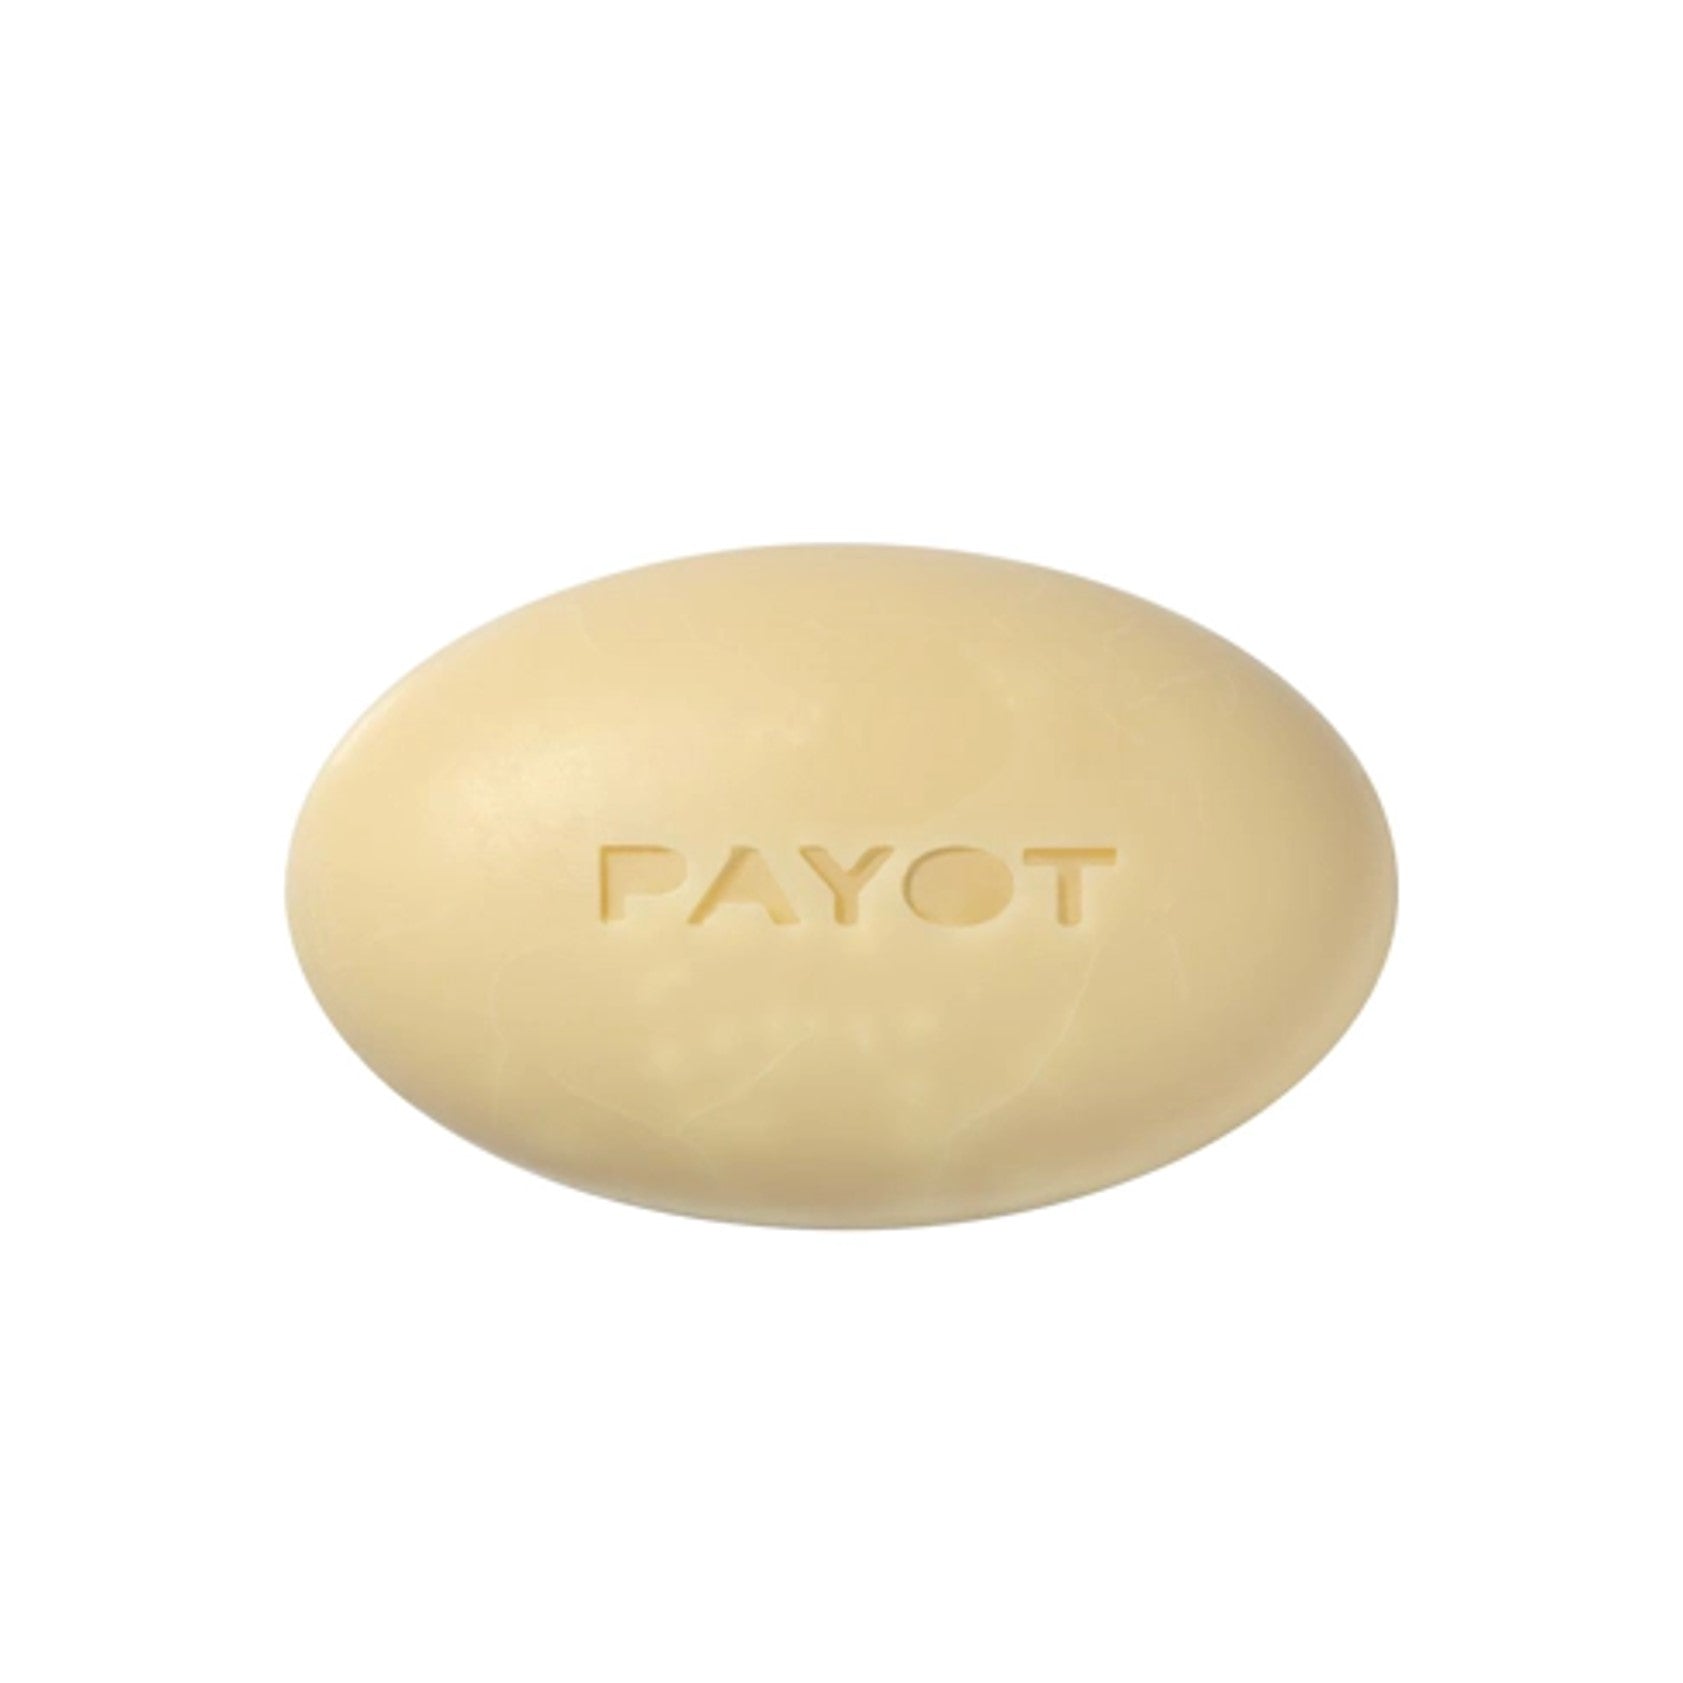 Payot Herbier Nourishing Face & Body Massage Bar 50G